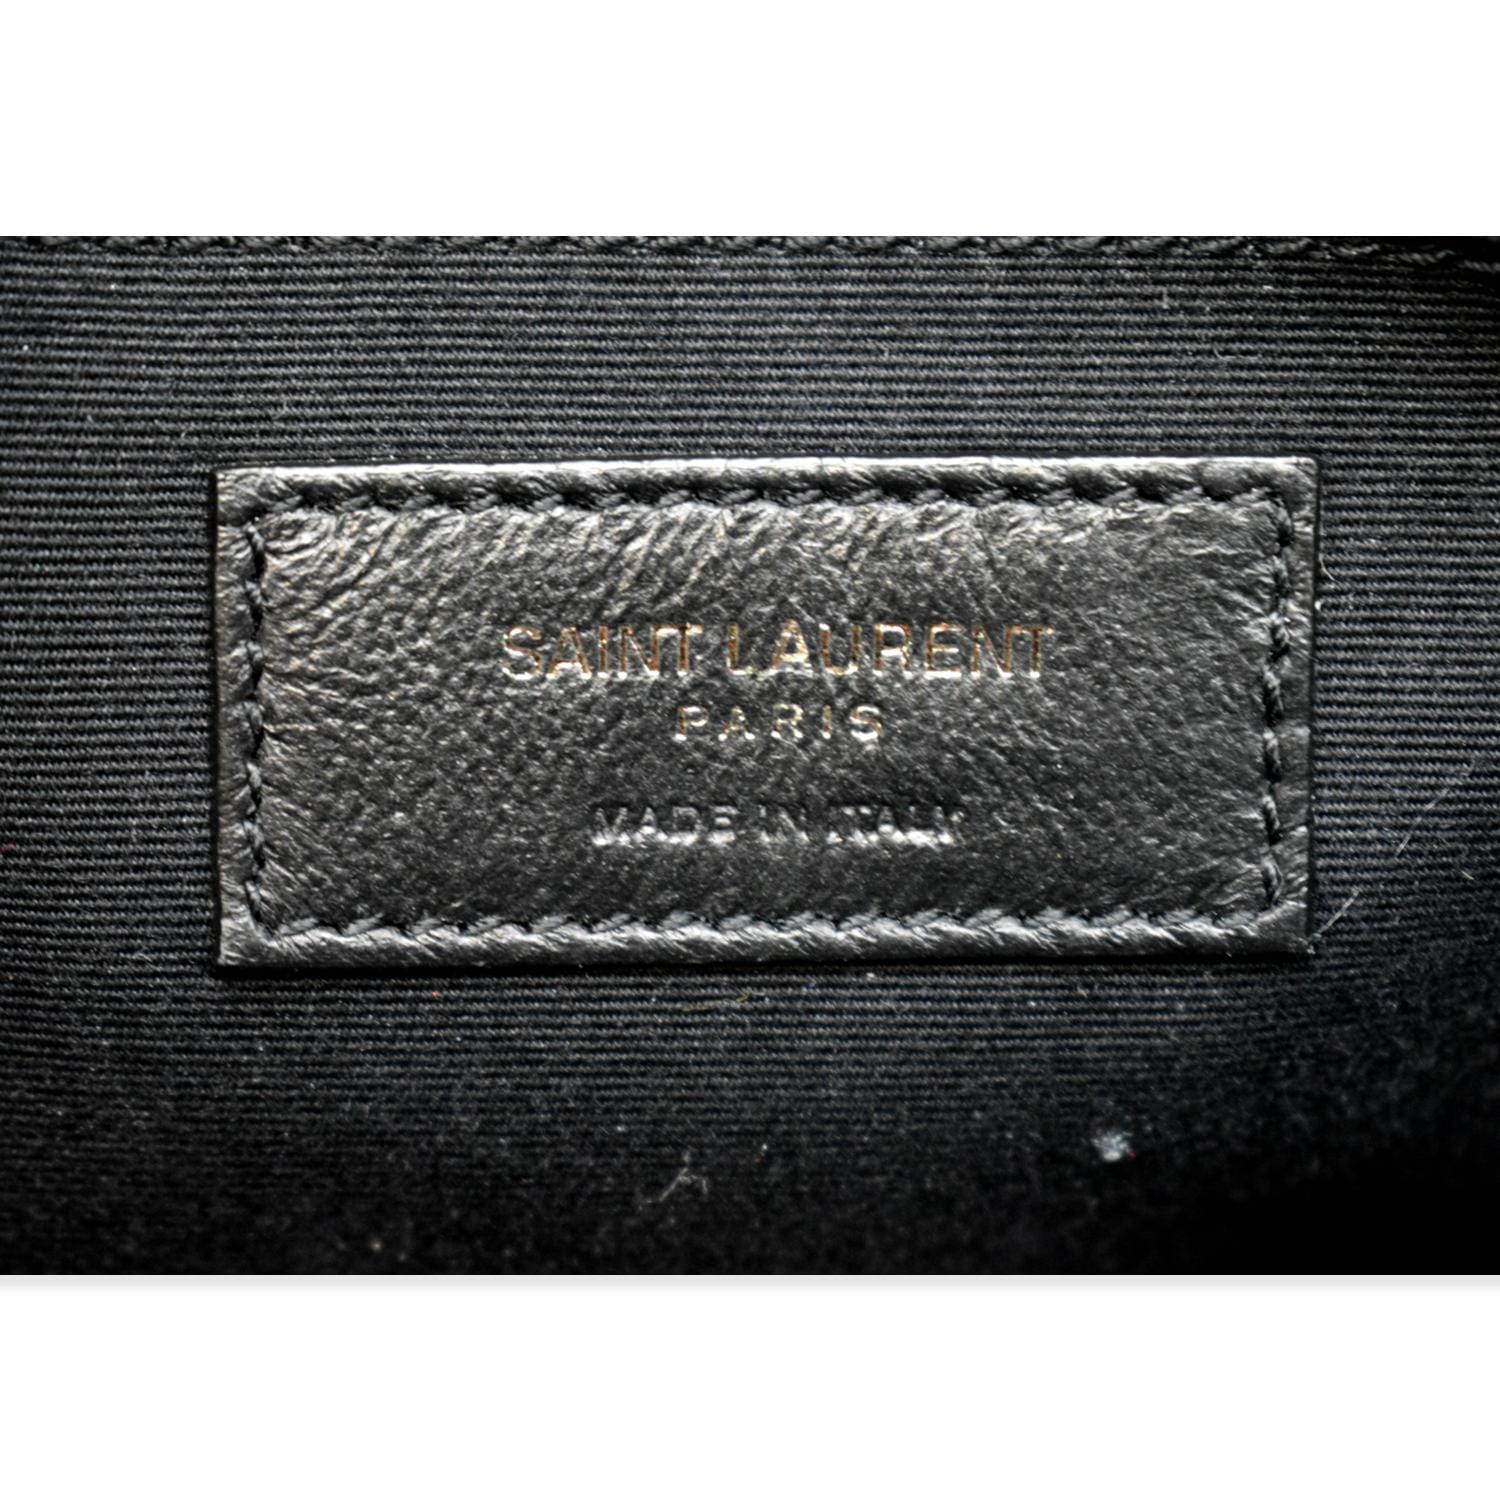 Vinyle leather crossbody bag Saint Laurent Black in Leather - 27453709